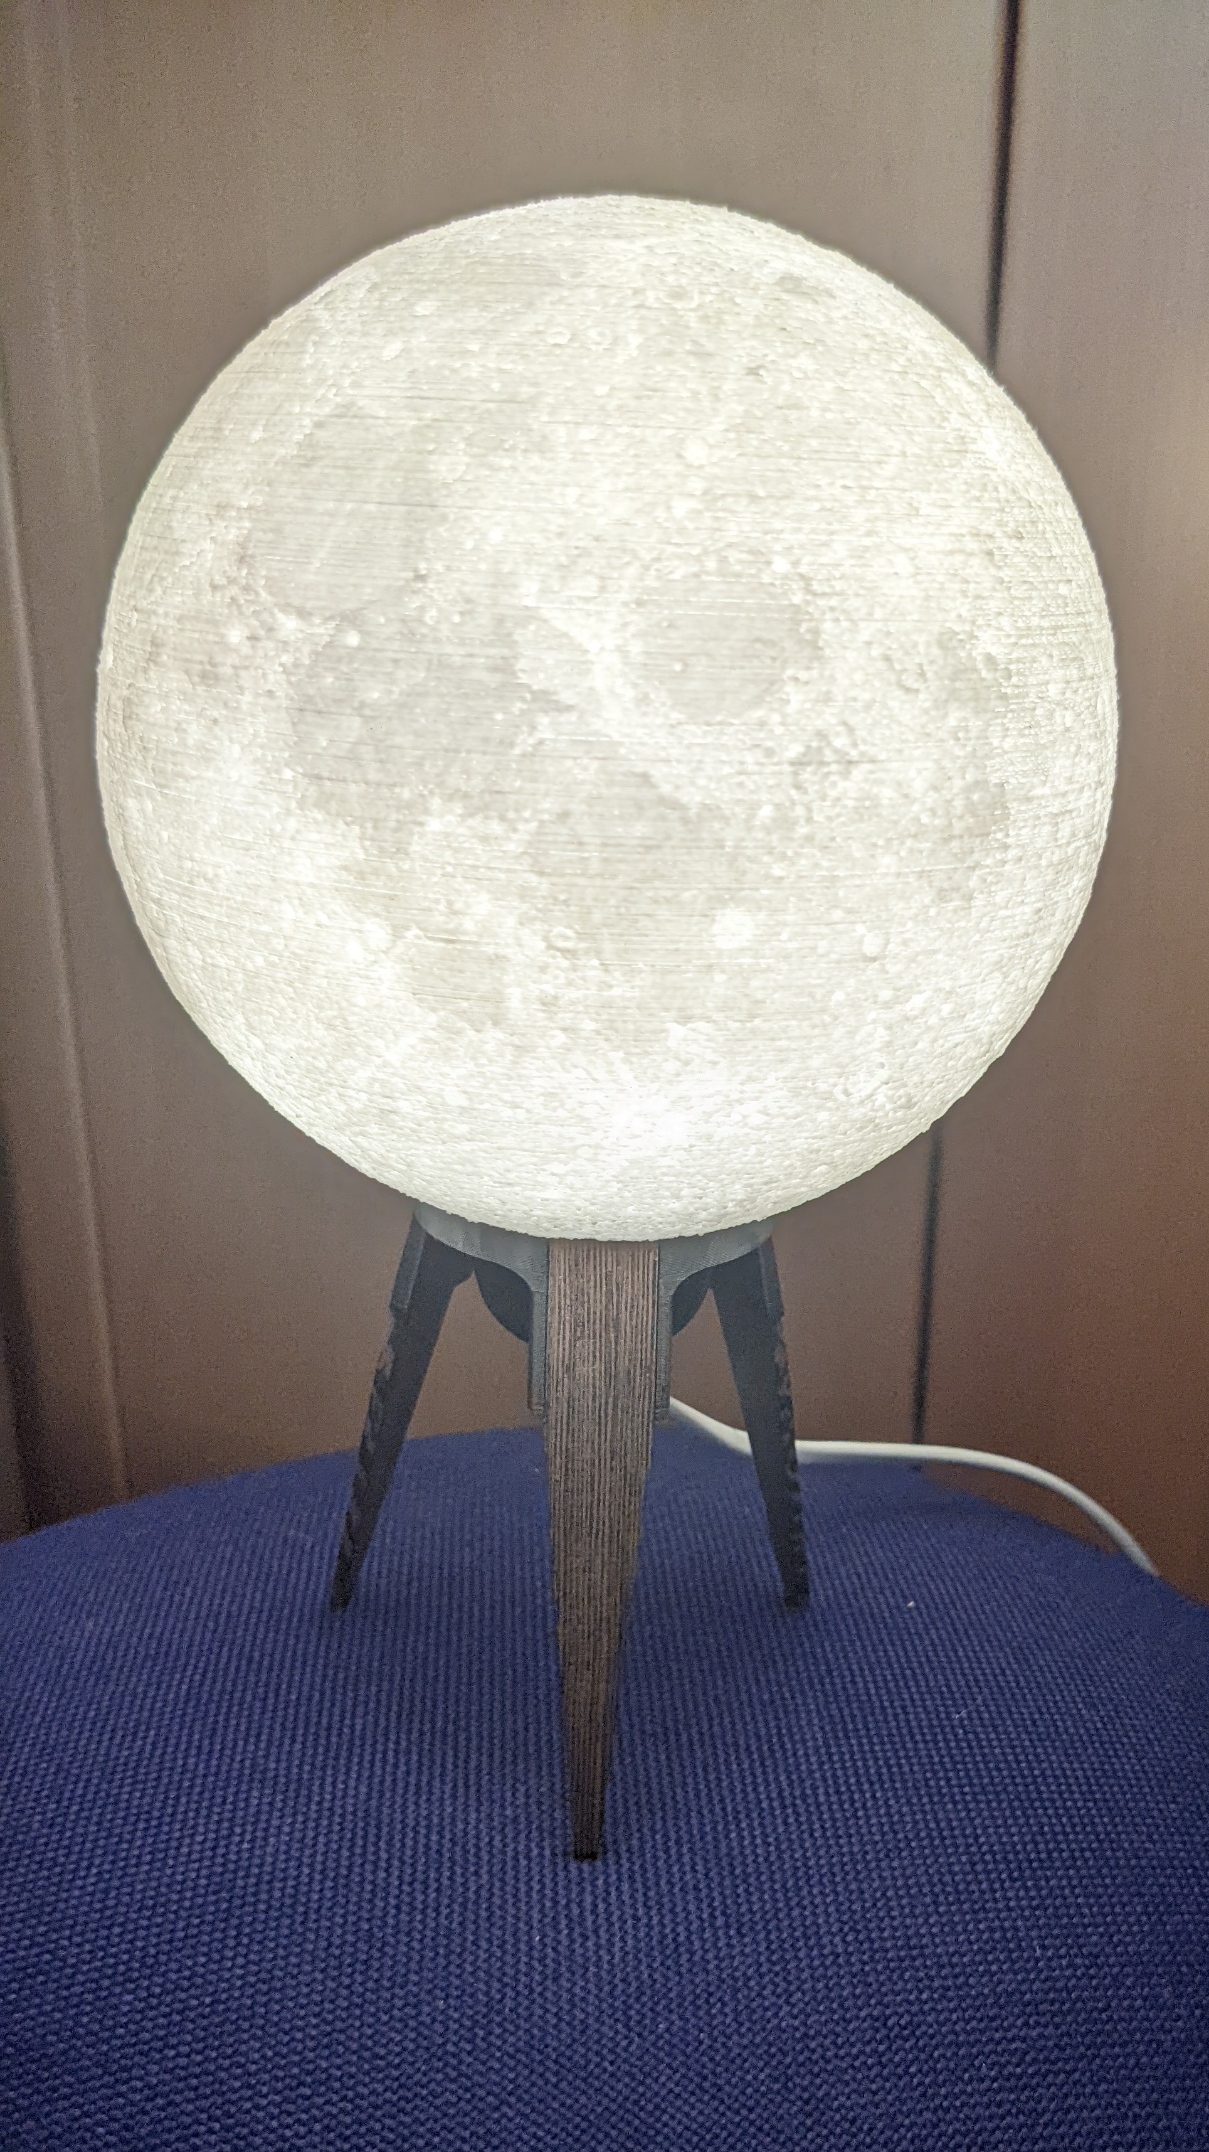 GU10 socket + Wood strips base for moon lamp lithophane